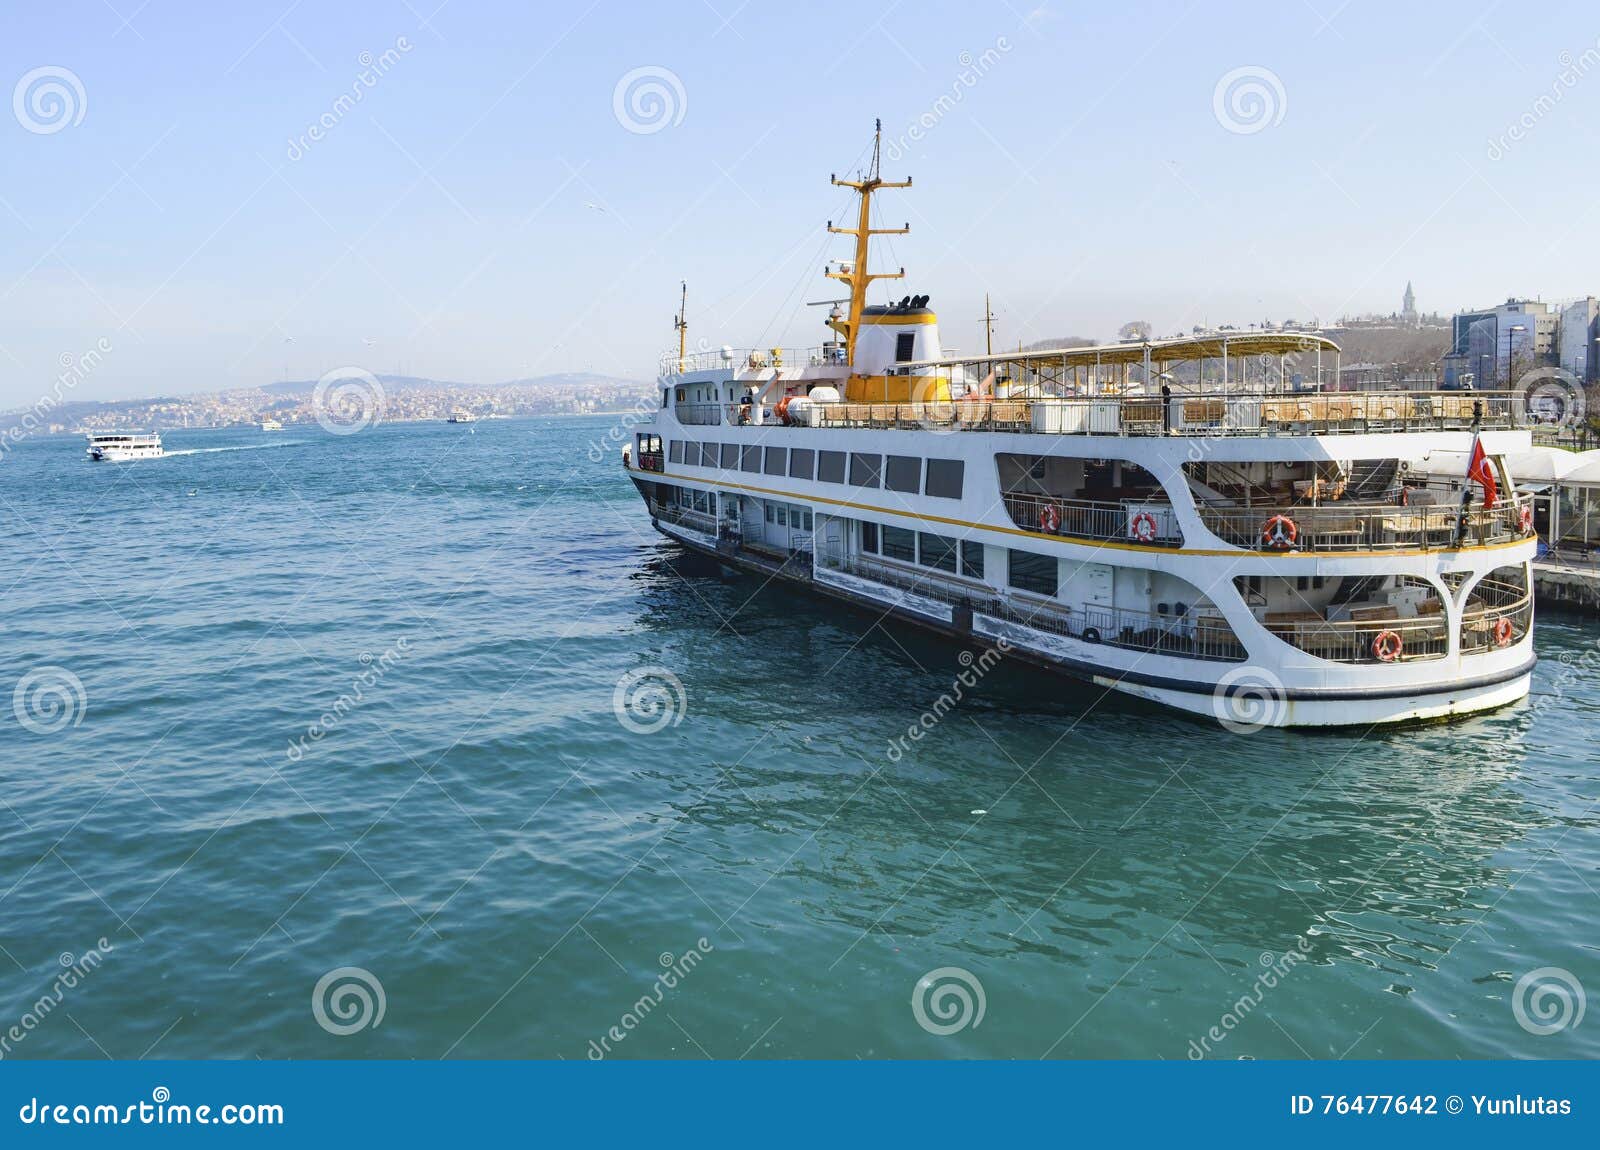 istanbul ferries, eminonu waiting in the harbor